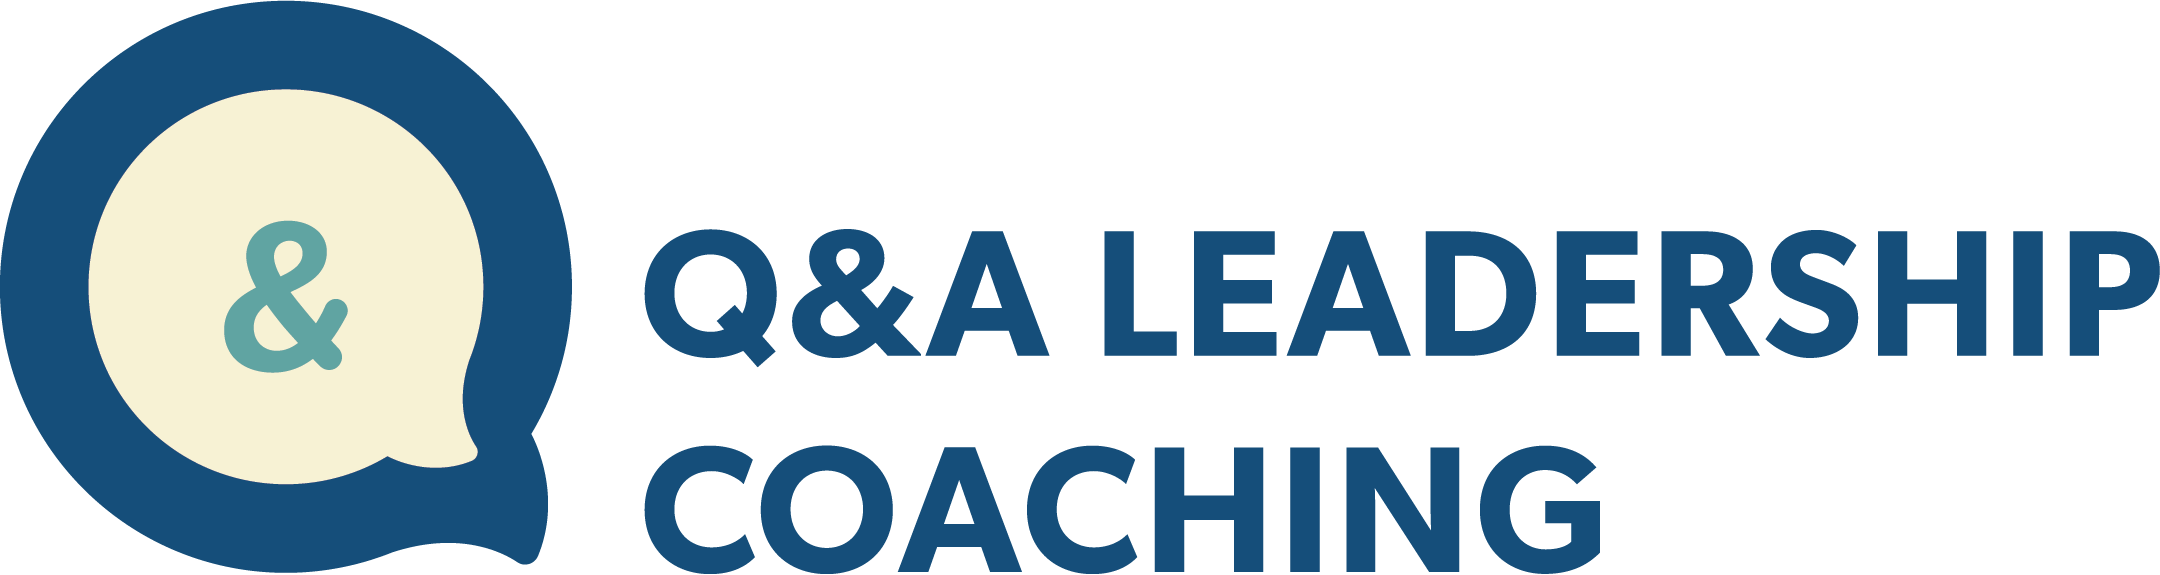 Q&amp;A Leadership Coaching